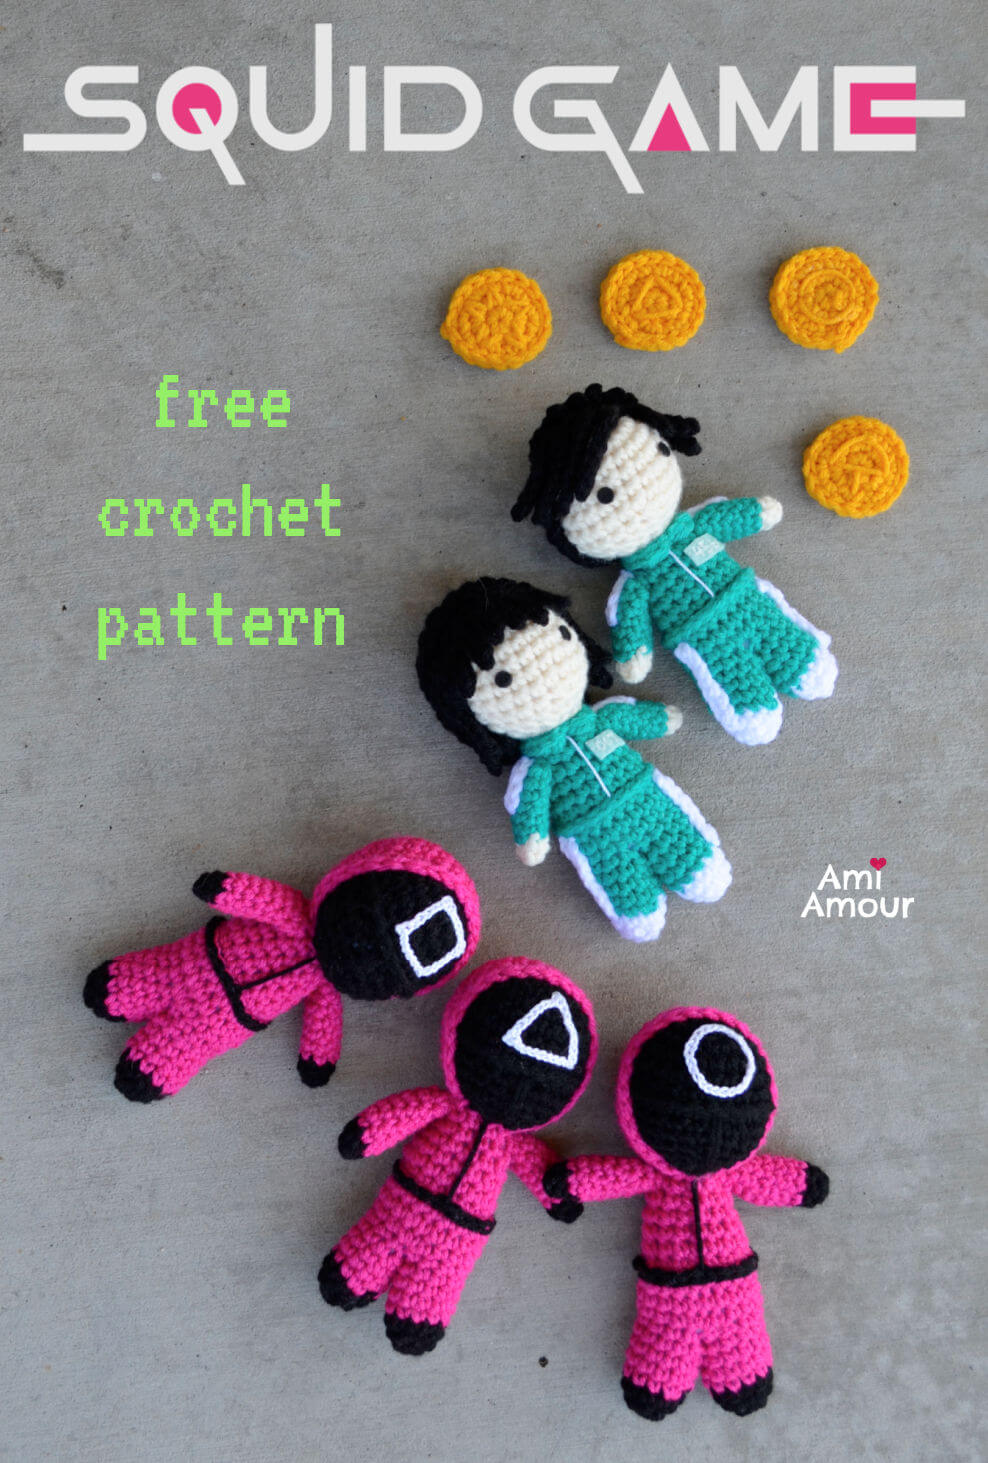 Squid Game - Free Crochet Pattern